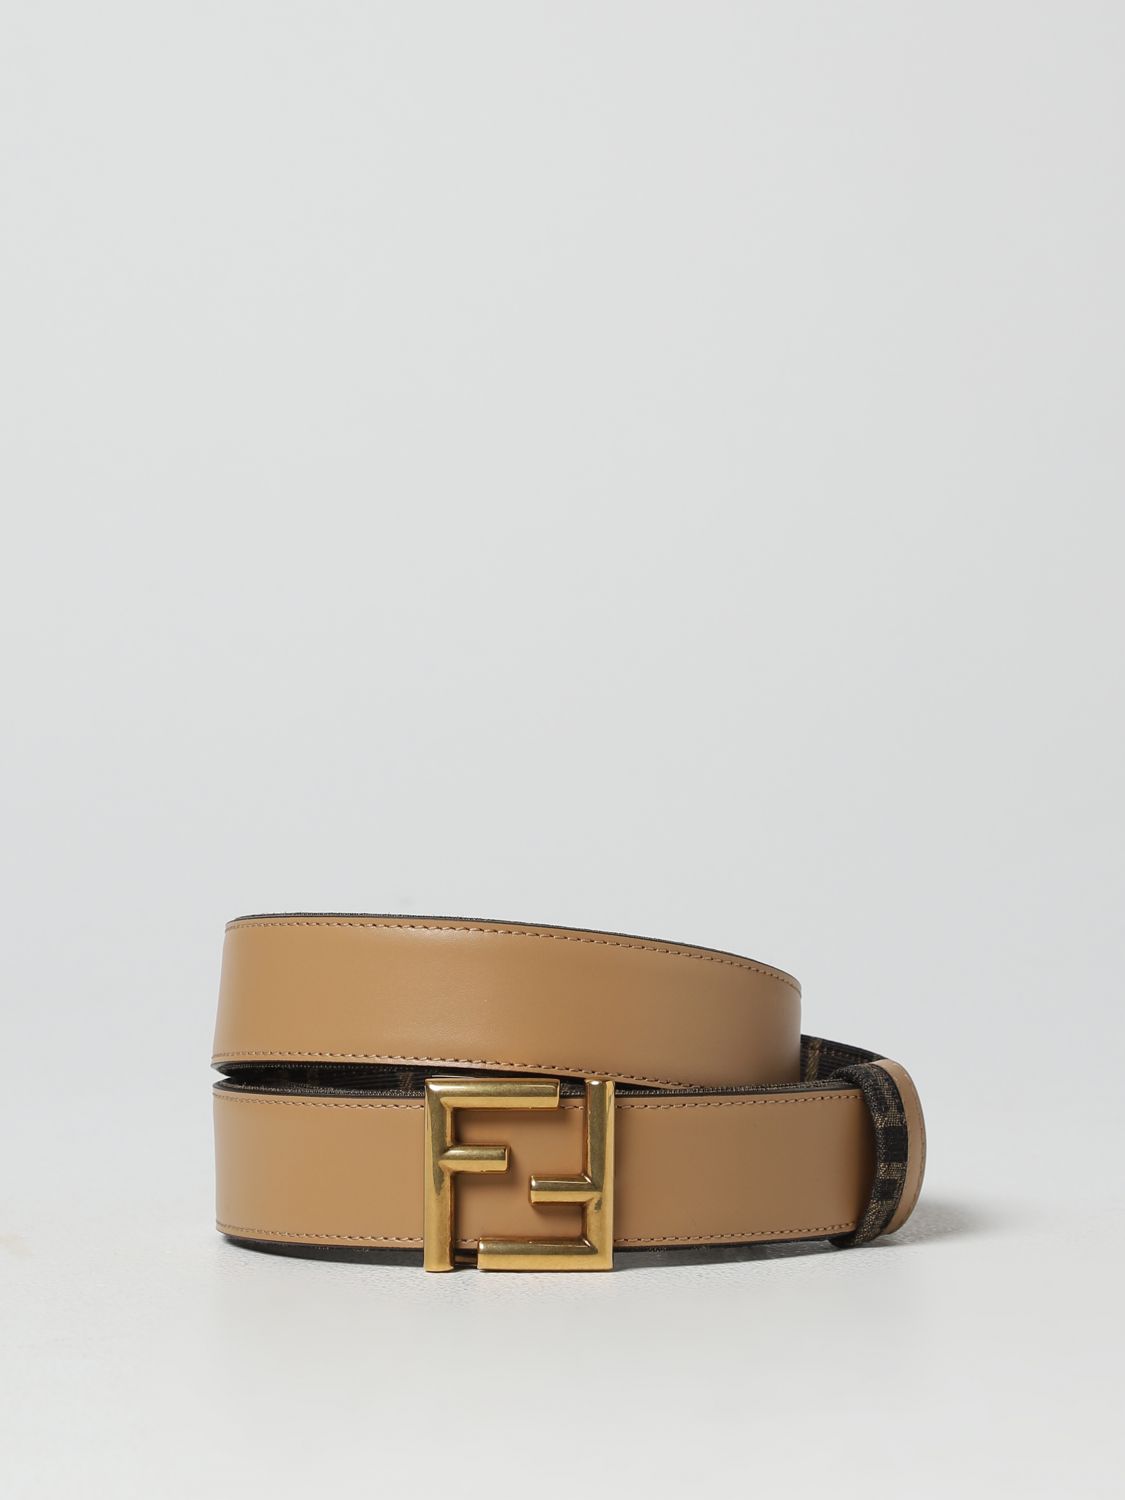 brown fendi belt